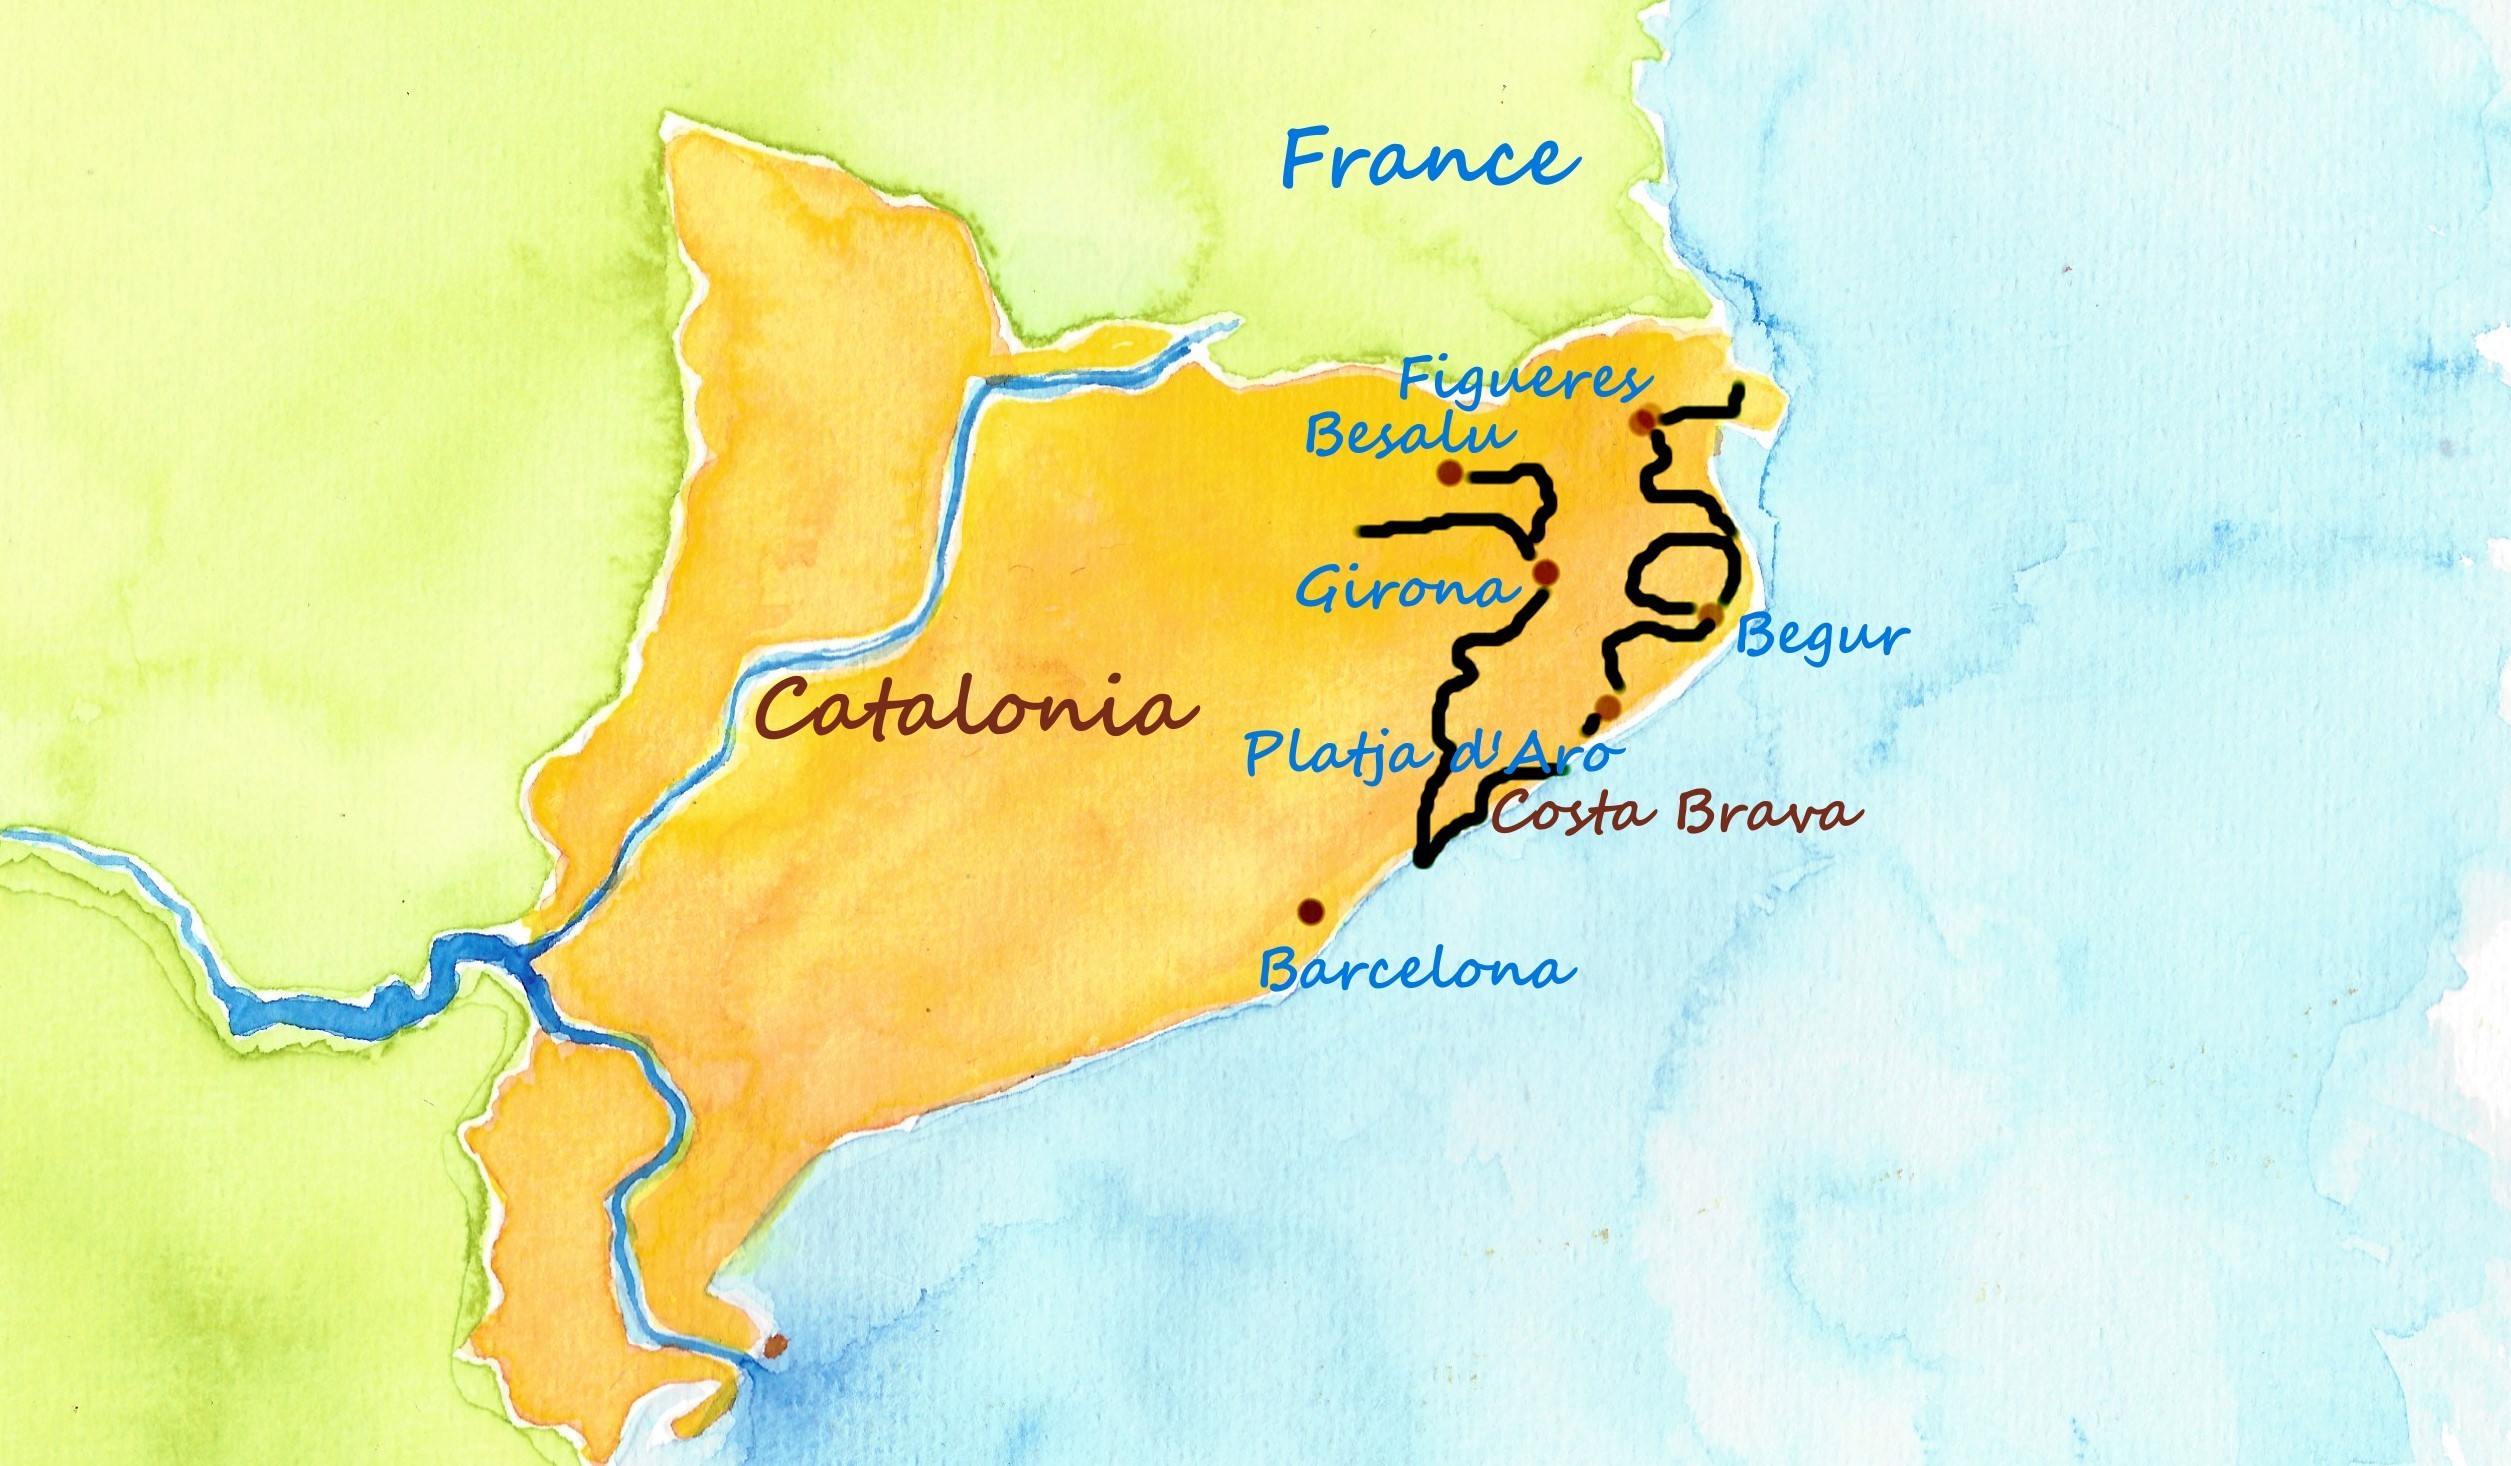 Catalonia Spain Biking Tour